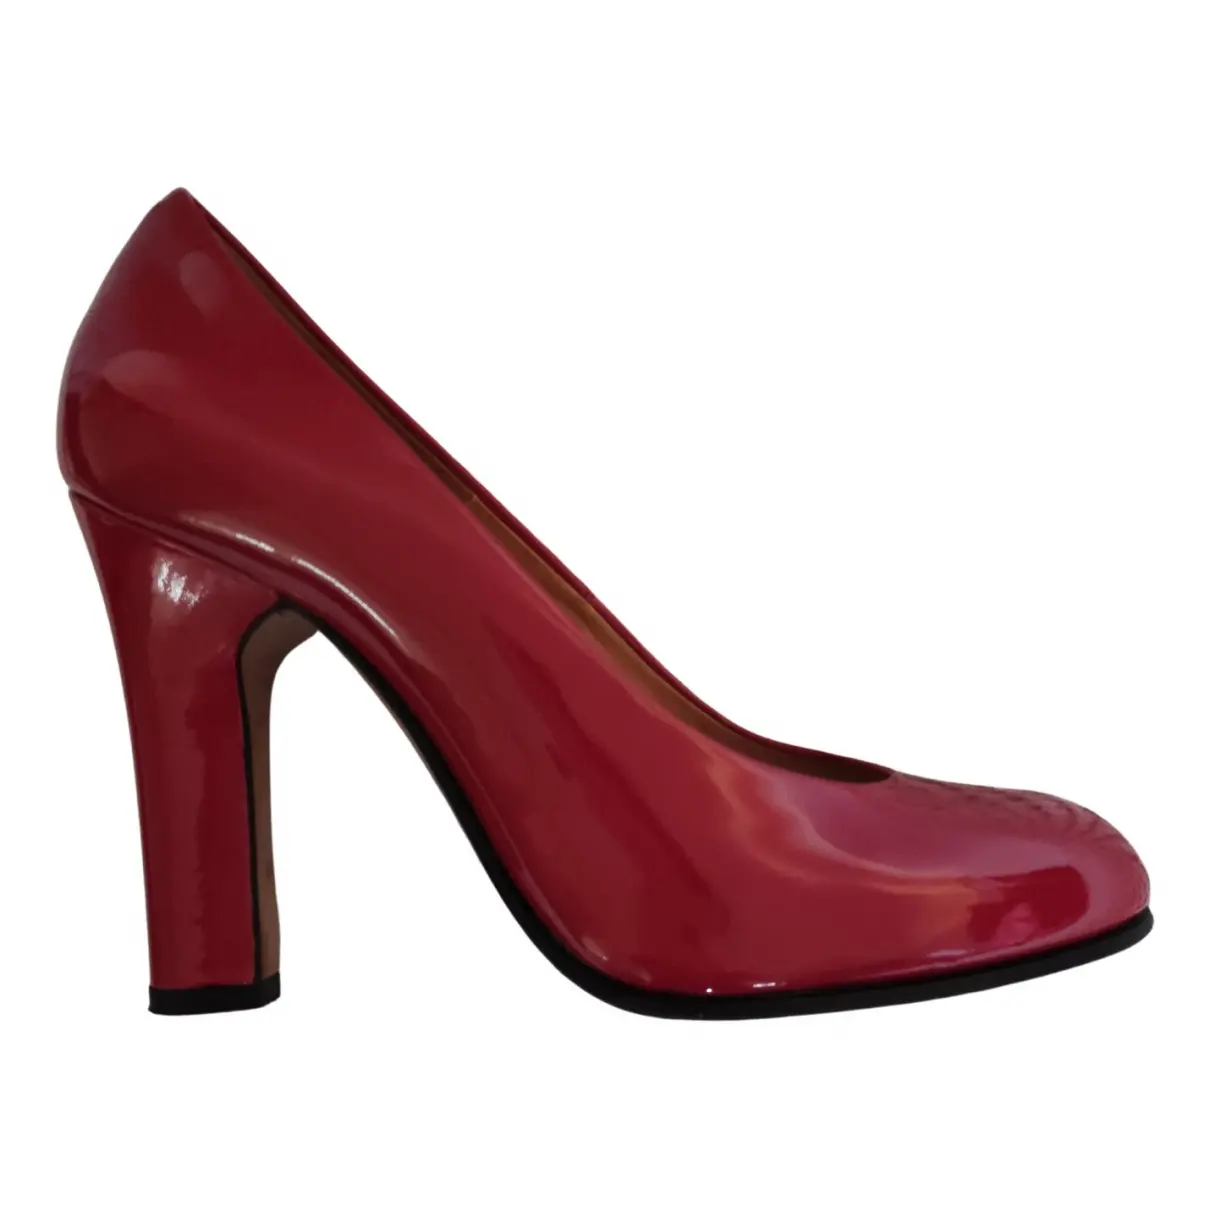 Patent leather heels Maison Martin Margiela